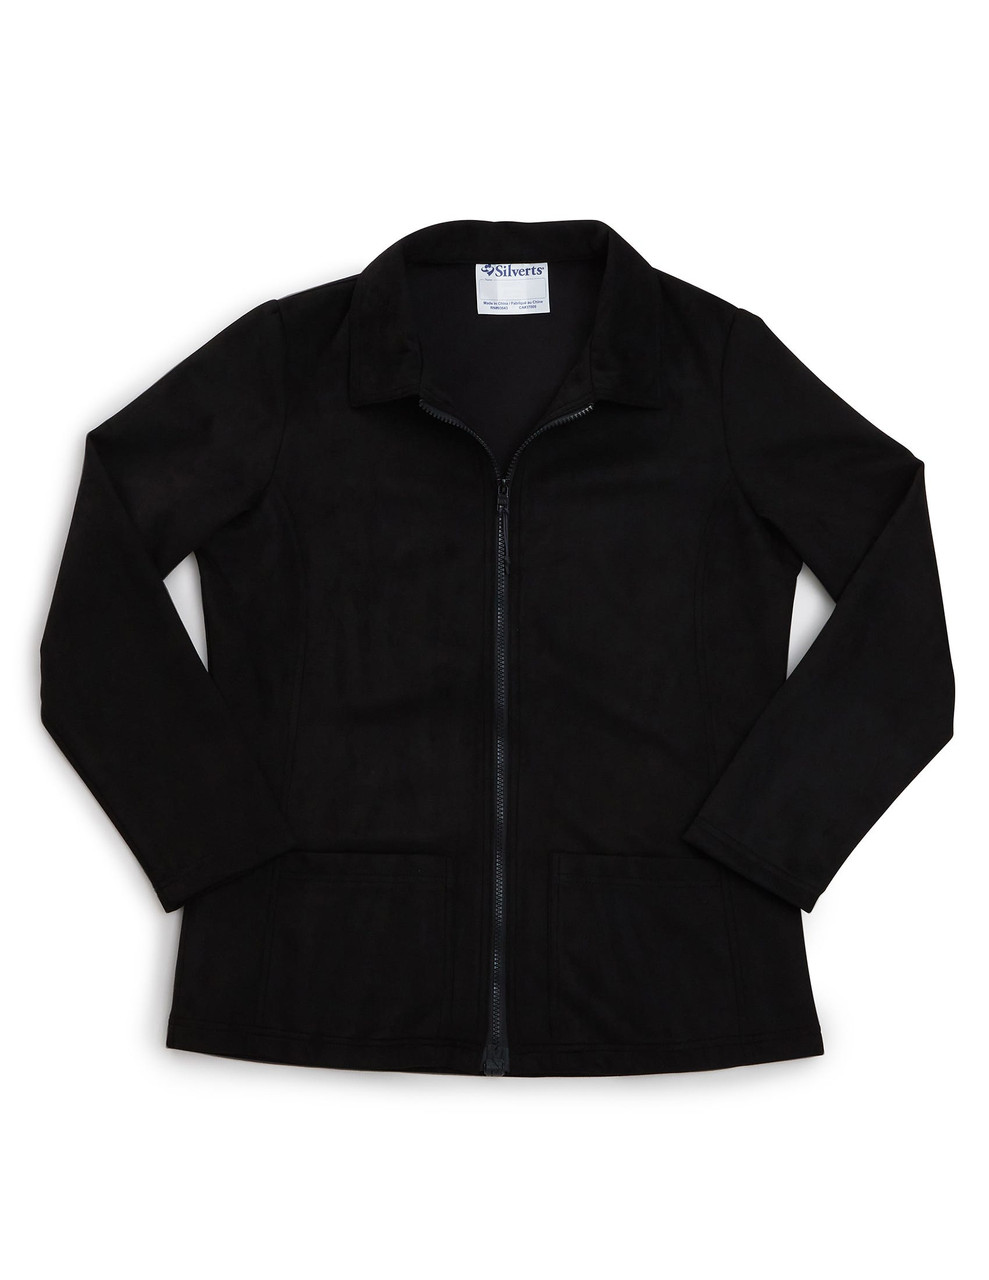 Silverts SV25480 Women's Magnetic Zip Front Jacket Black, Size=S, SV25480-SV2-S